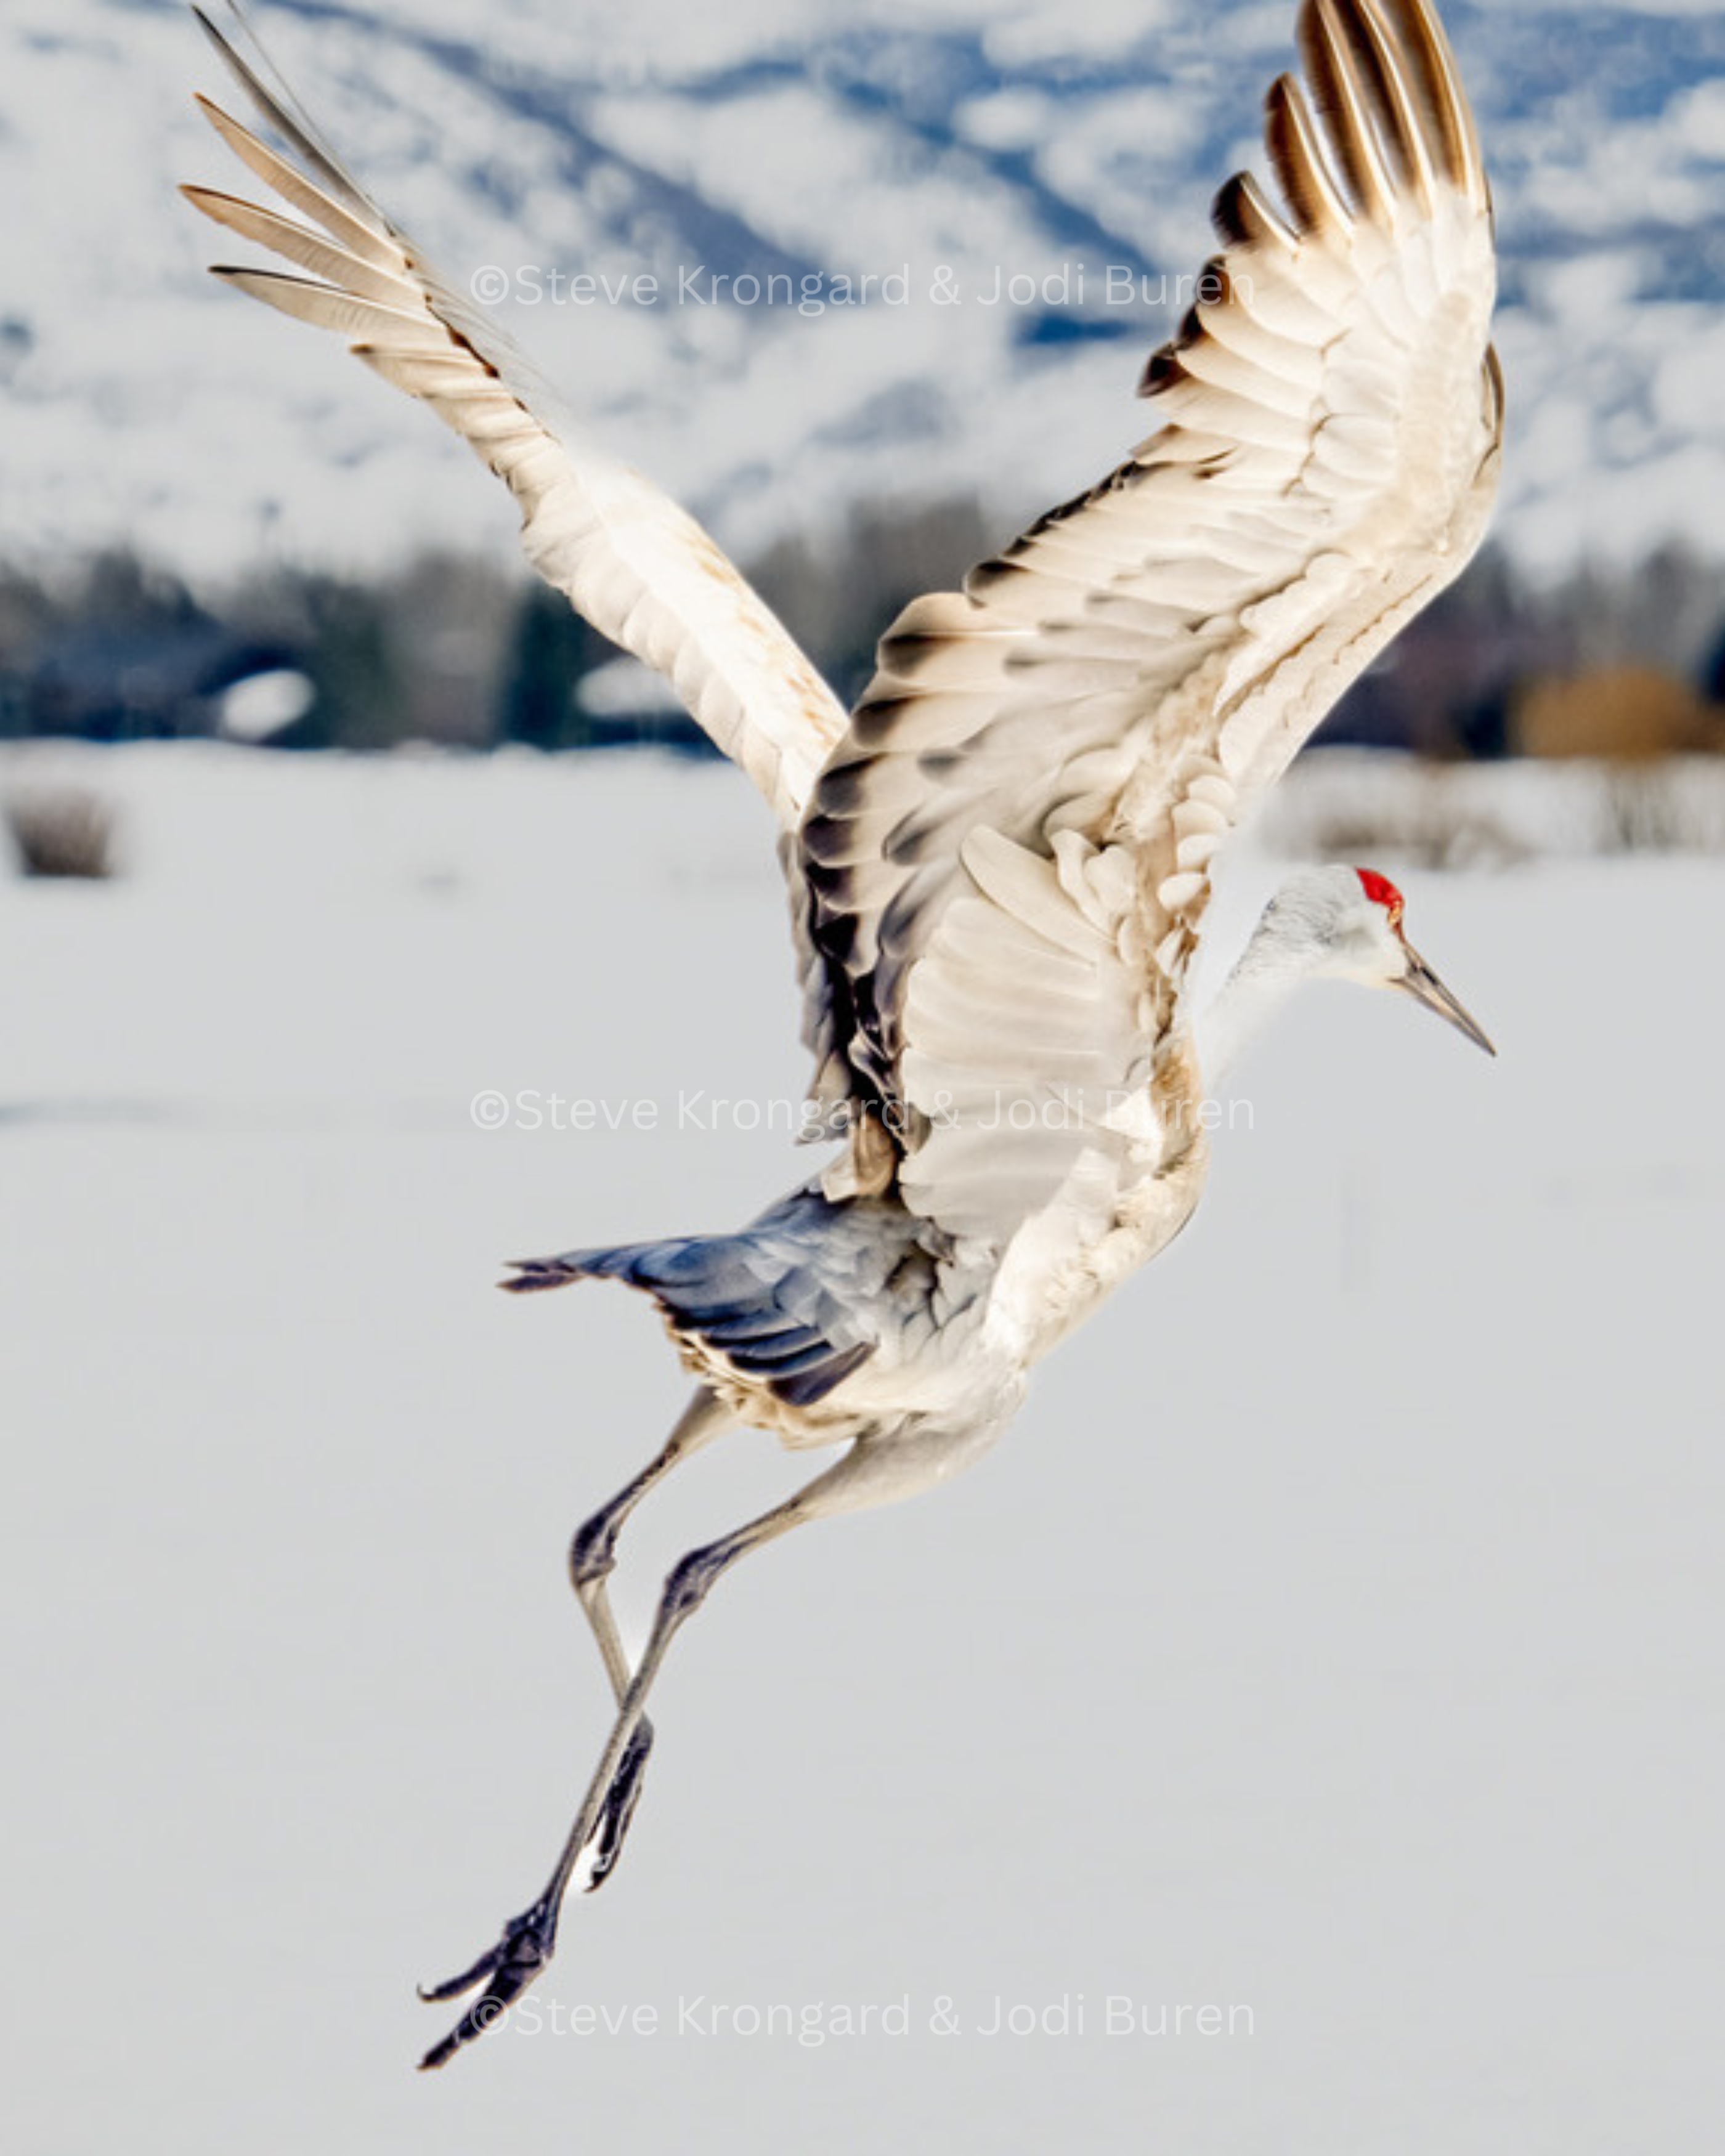 Sandhill crane in mid-flight over snowy nature preserve